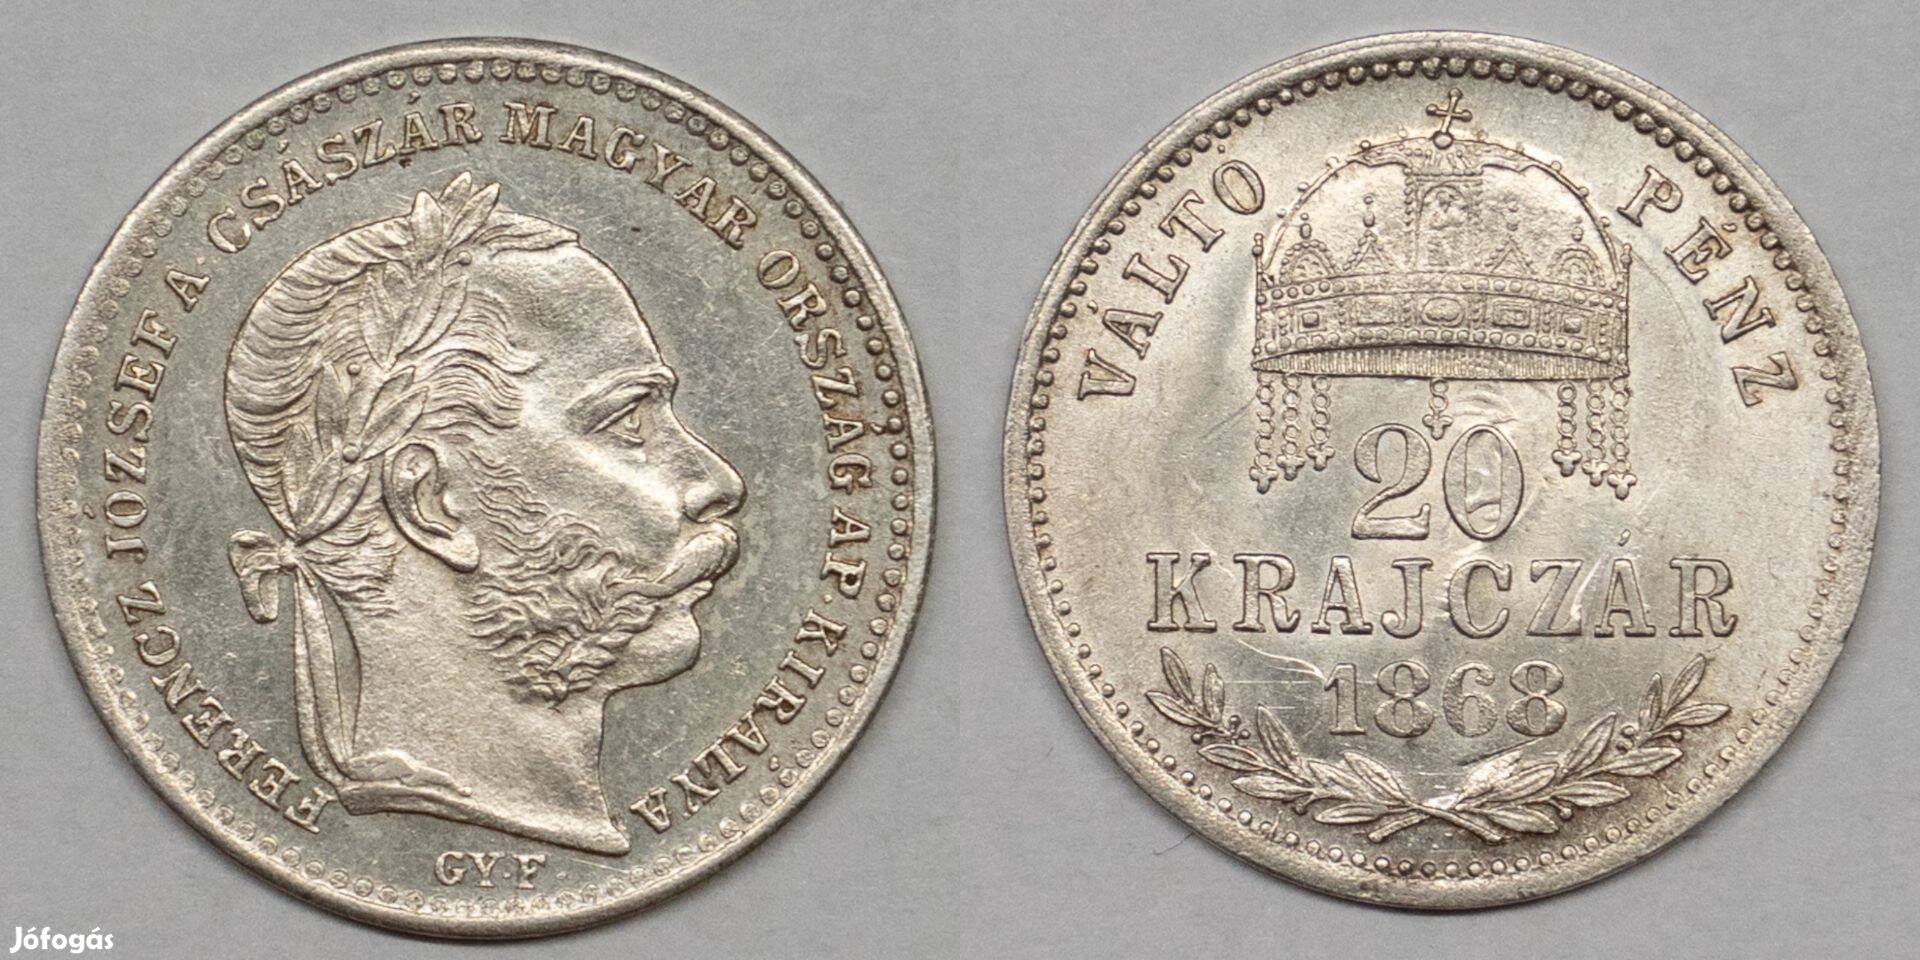 20 krajczár 1868 Ferenc József GYF - VP